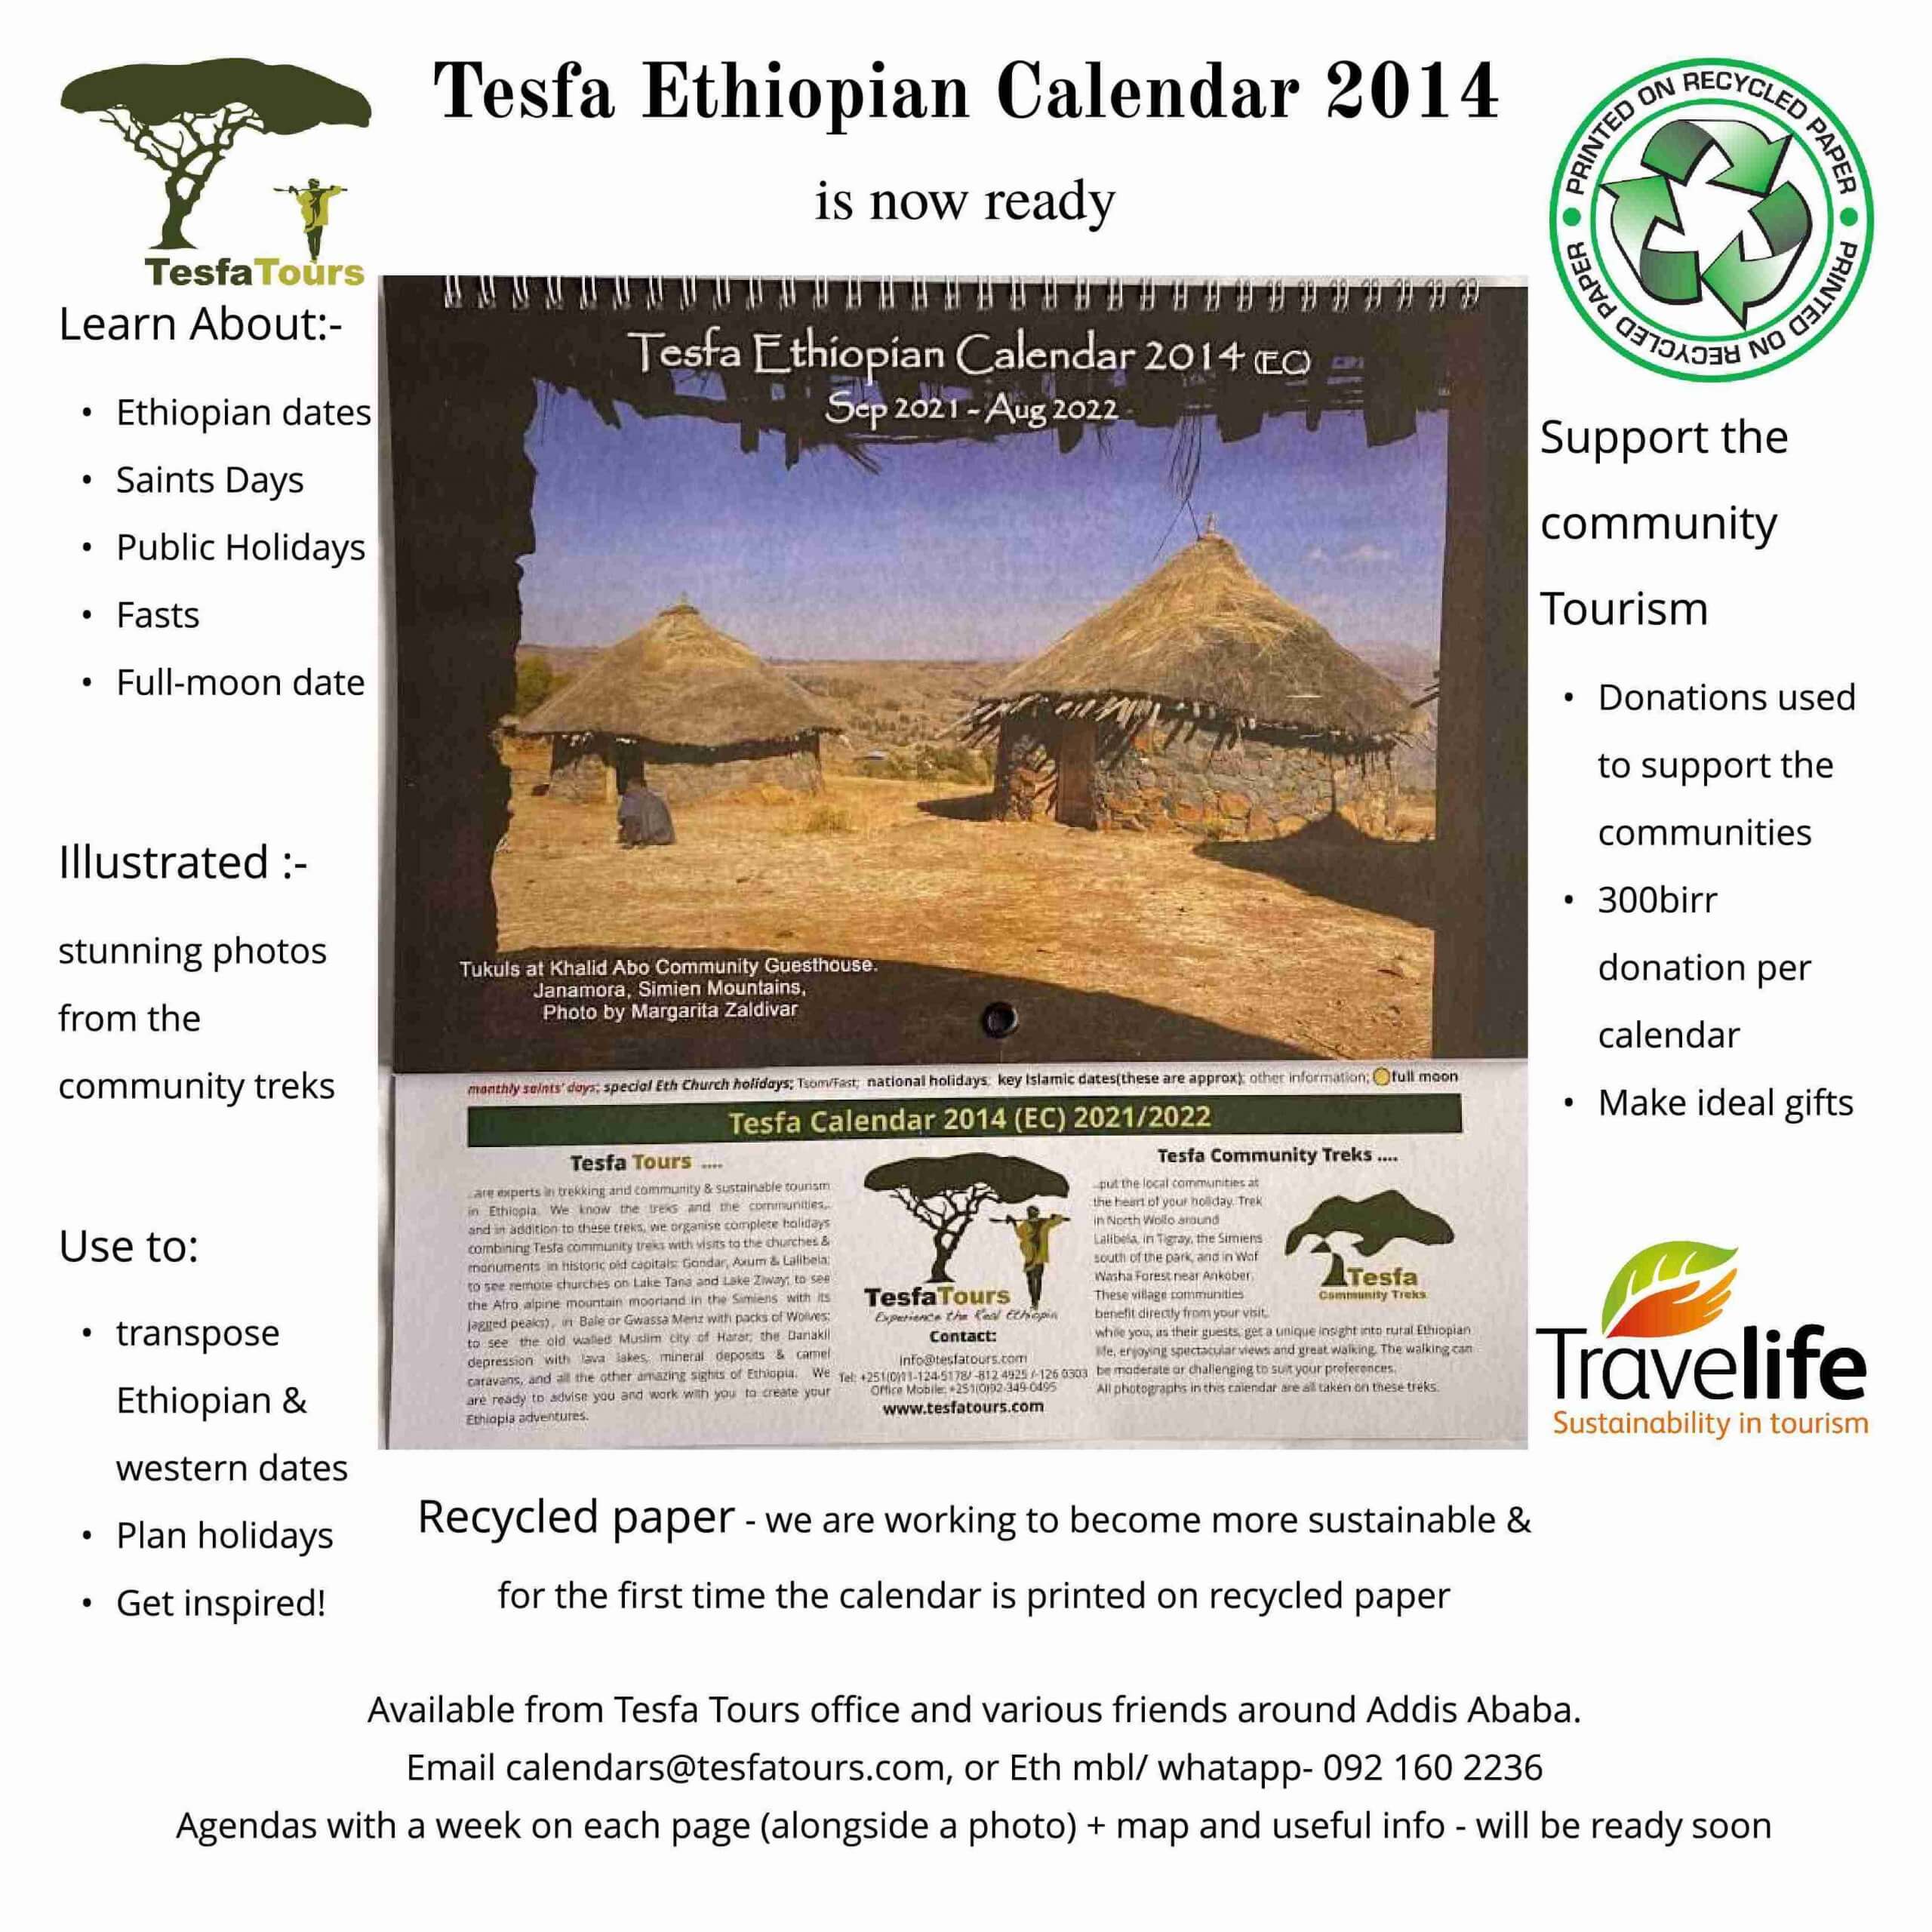 Tesfa Ethiopian Calendar 2014 (EC) ready Tesfa Tours